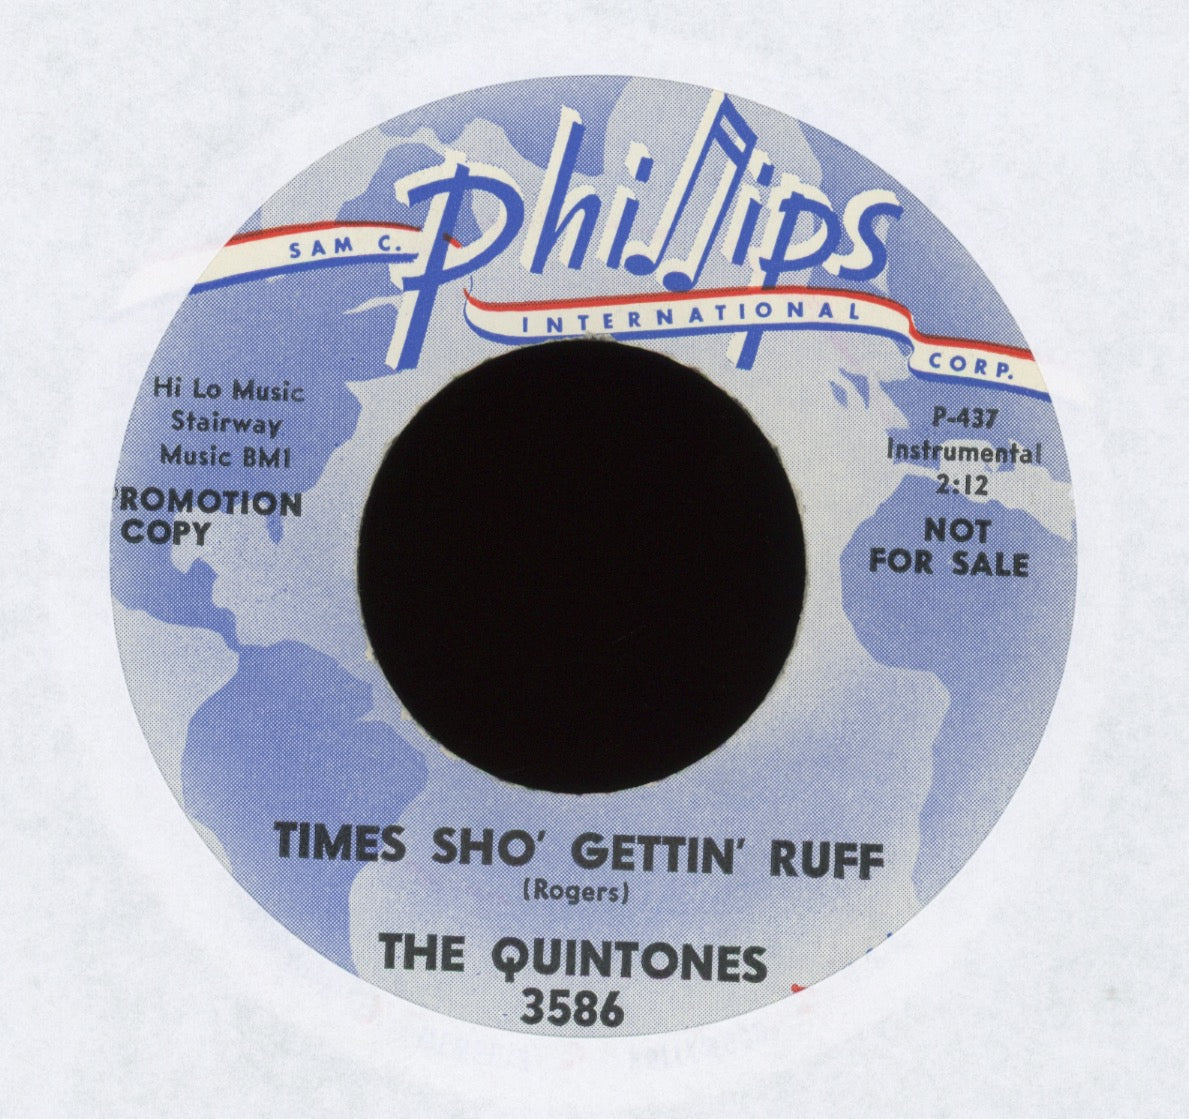 The Quintones - Times Sho' Gettin' Ruff on Phillips Promo